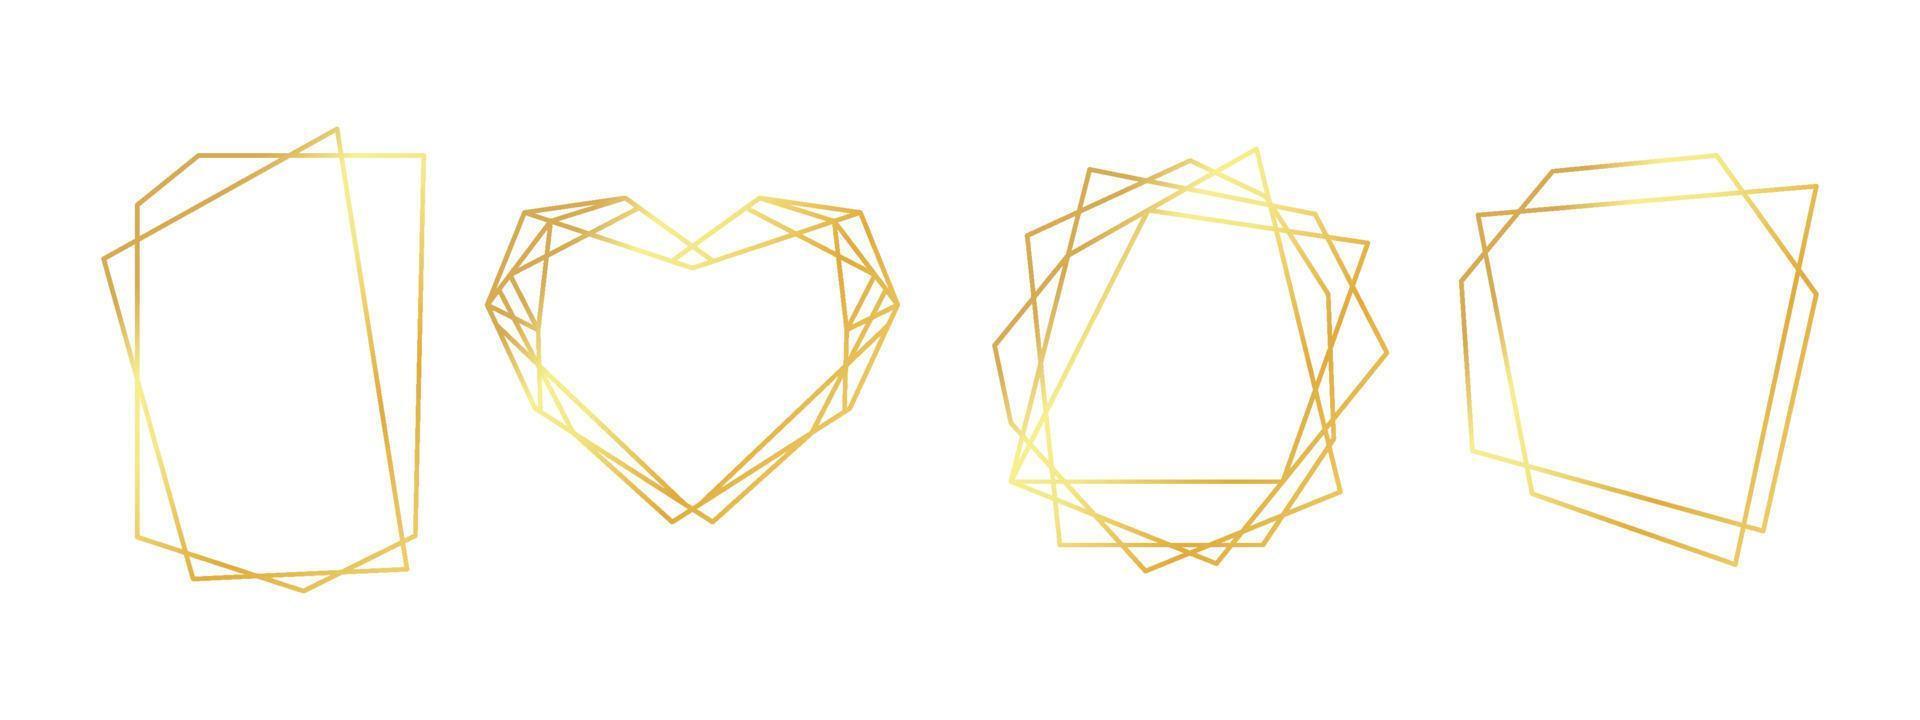 Golden polygonal borders. Geometric wedding frames isolated on white background vector